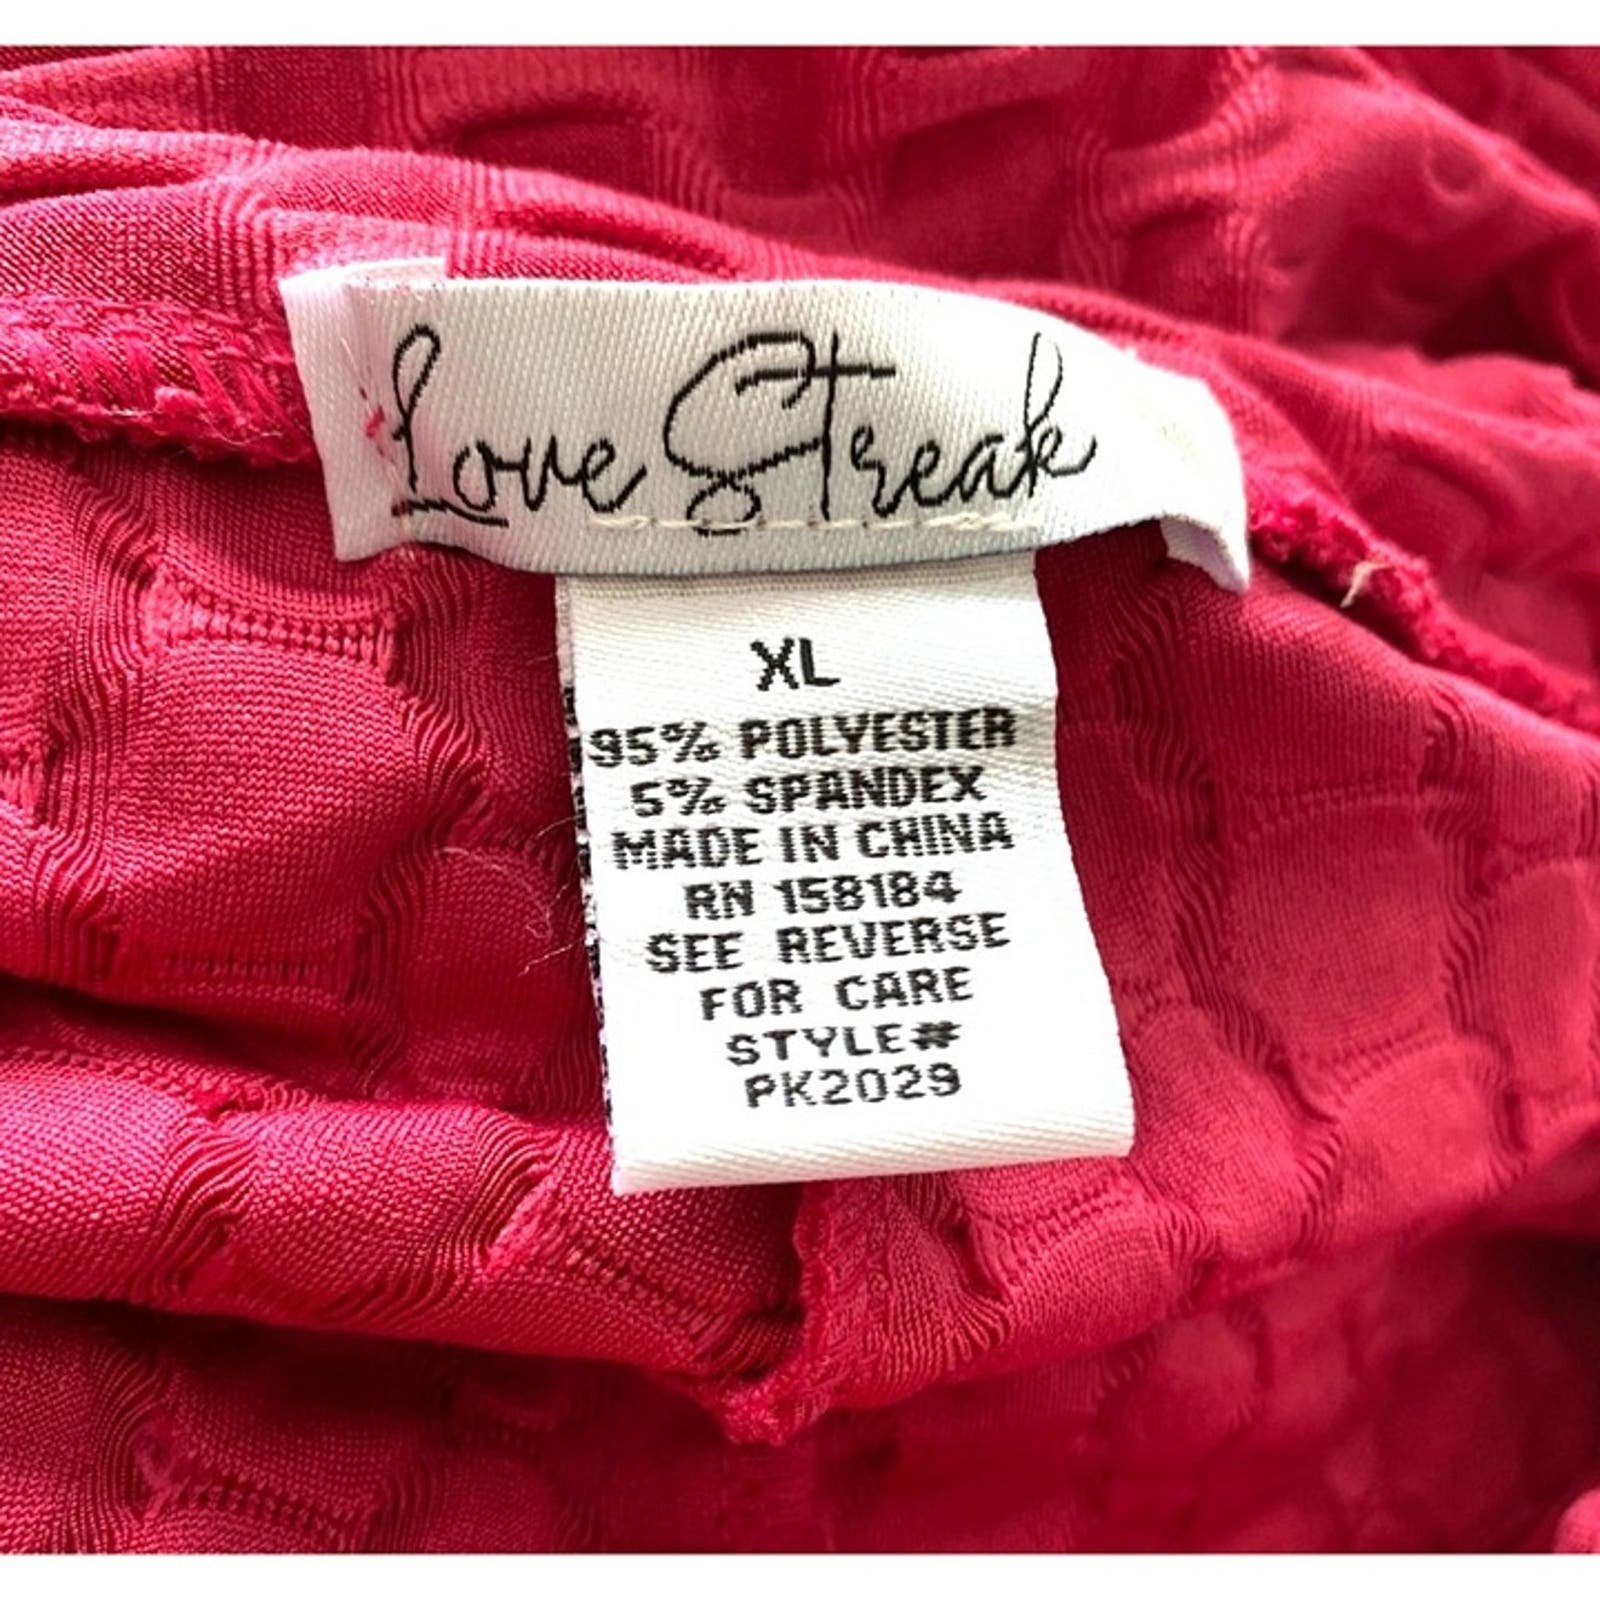 cheapest place to buy  Love Streak Active Womens Pink Honeycomb Stretch High Waist Leggings Size XL pRKBTLtaJ online store